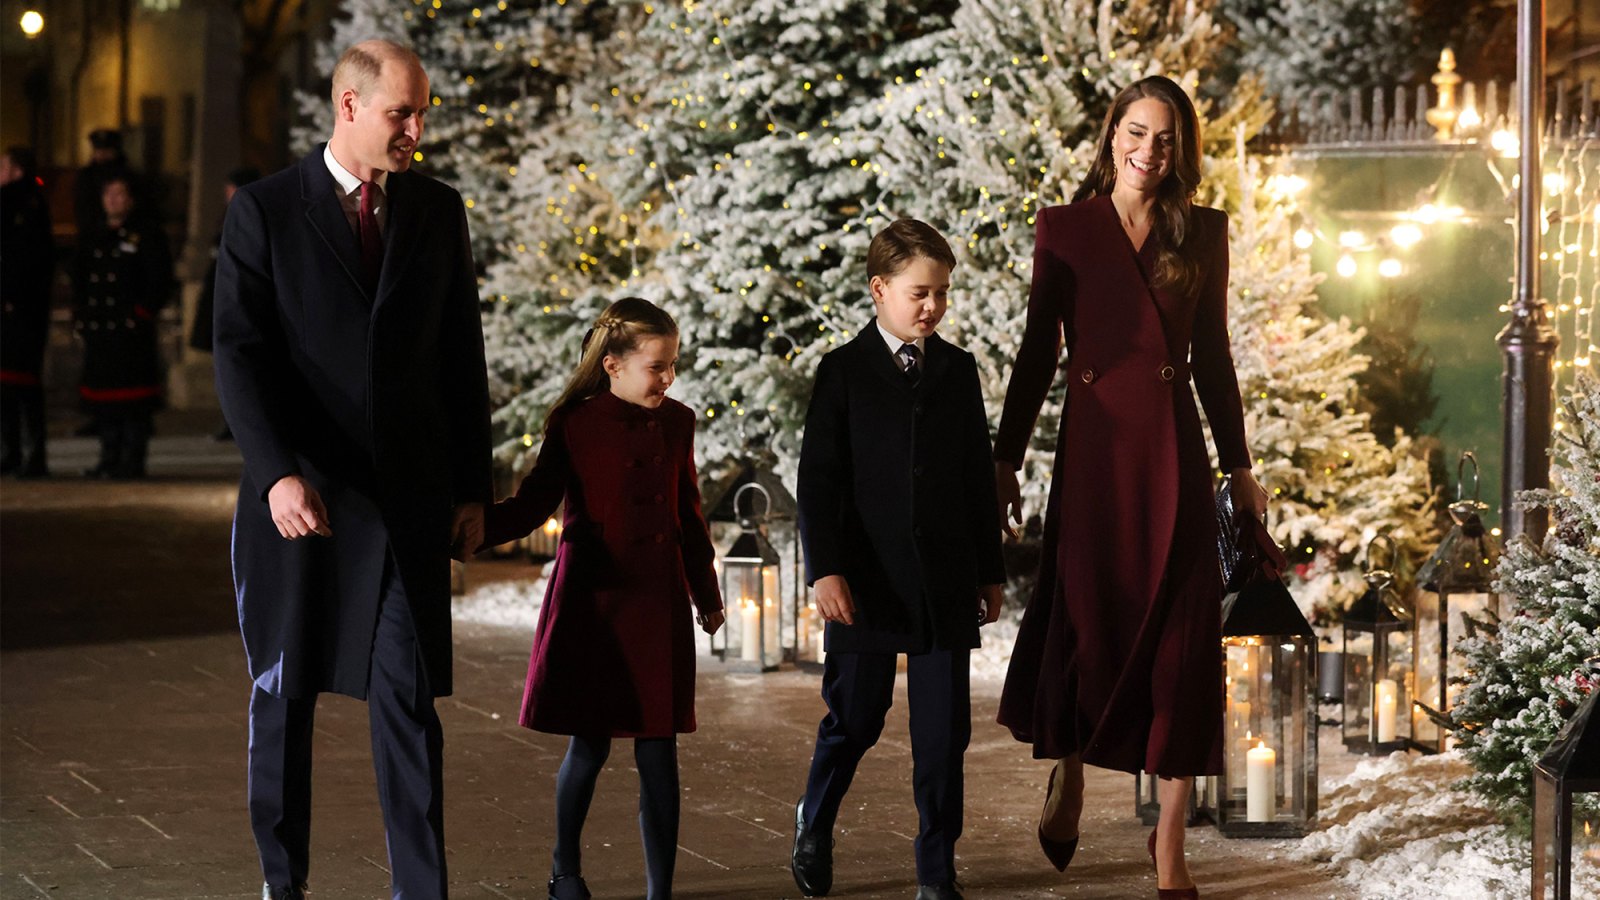 Princess Kate, Pippa Middleton Wear Matching Coats at Holiday Show